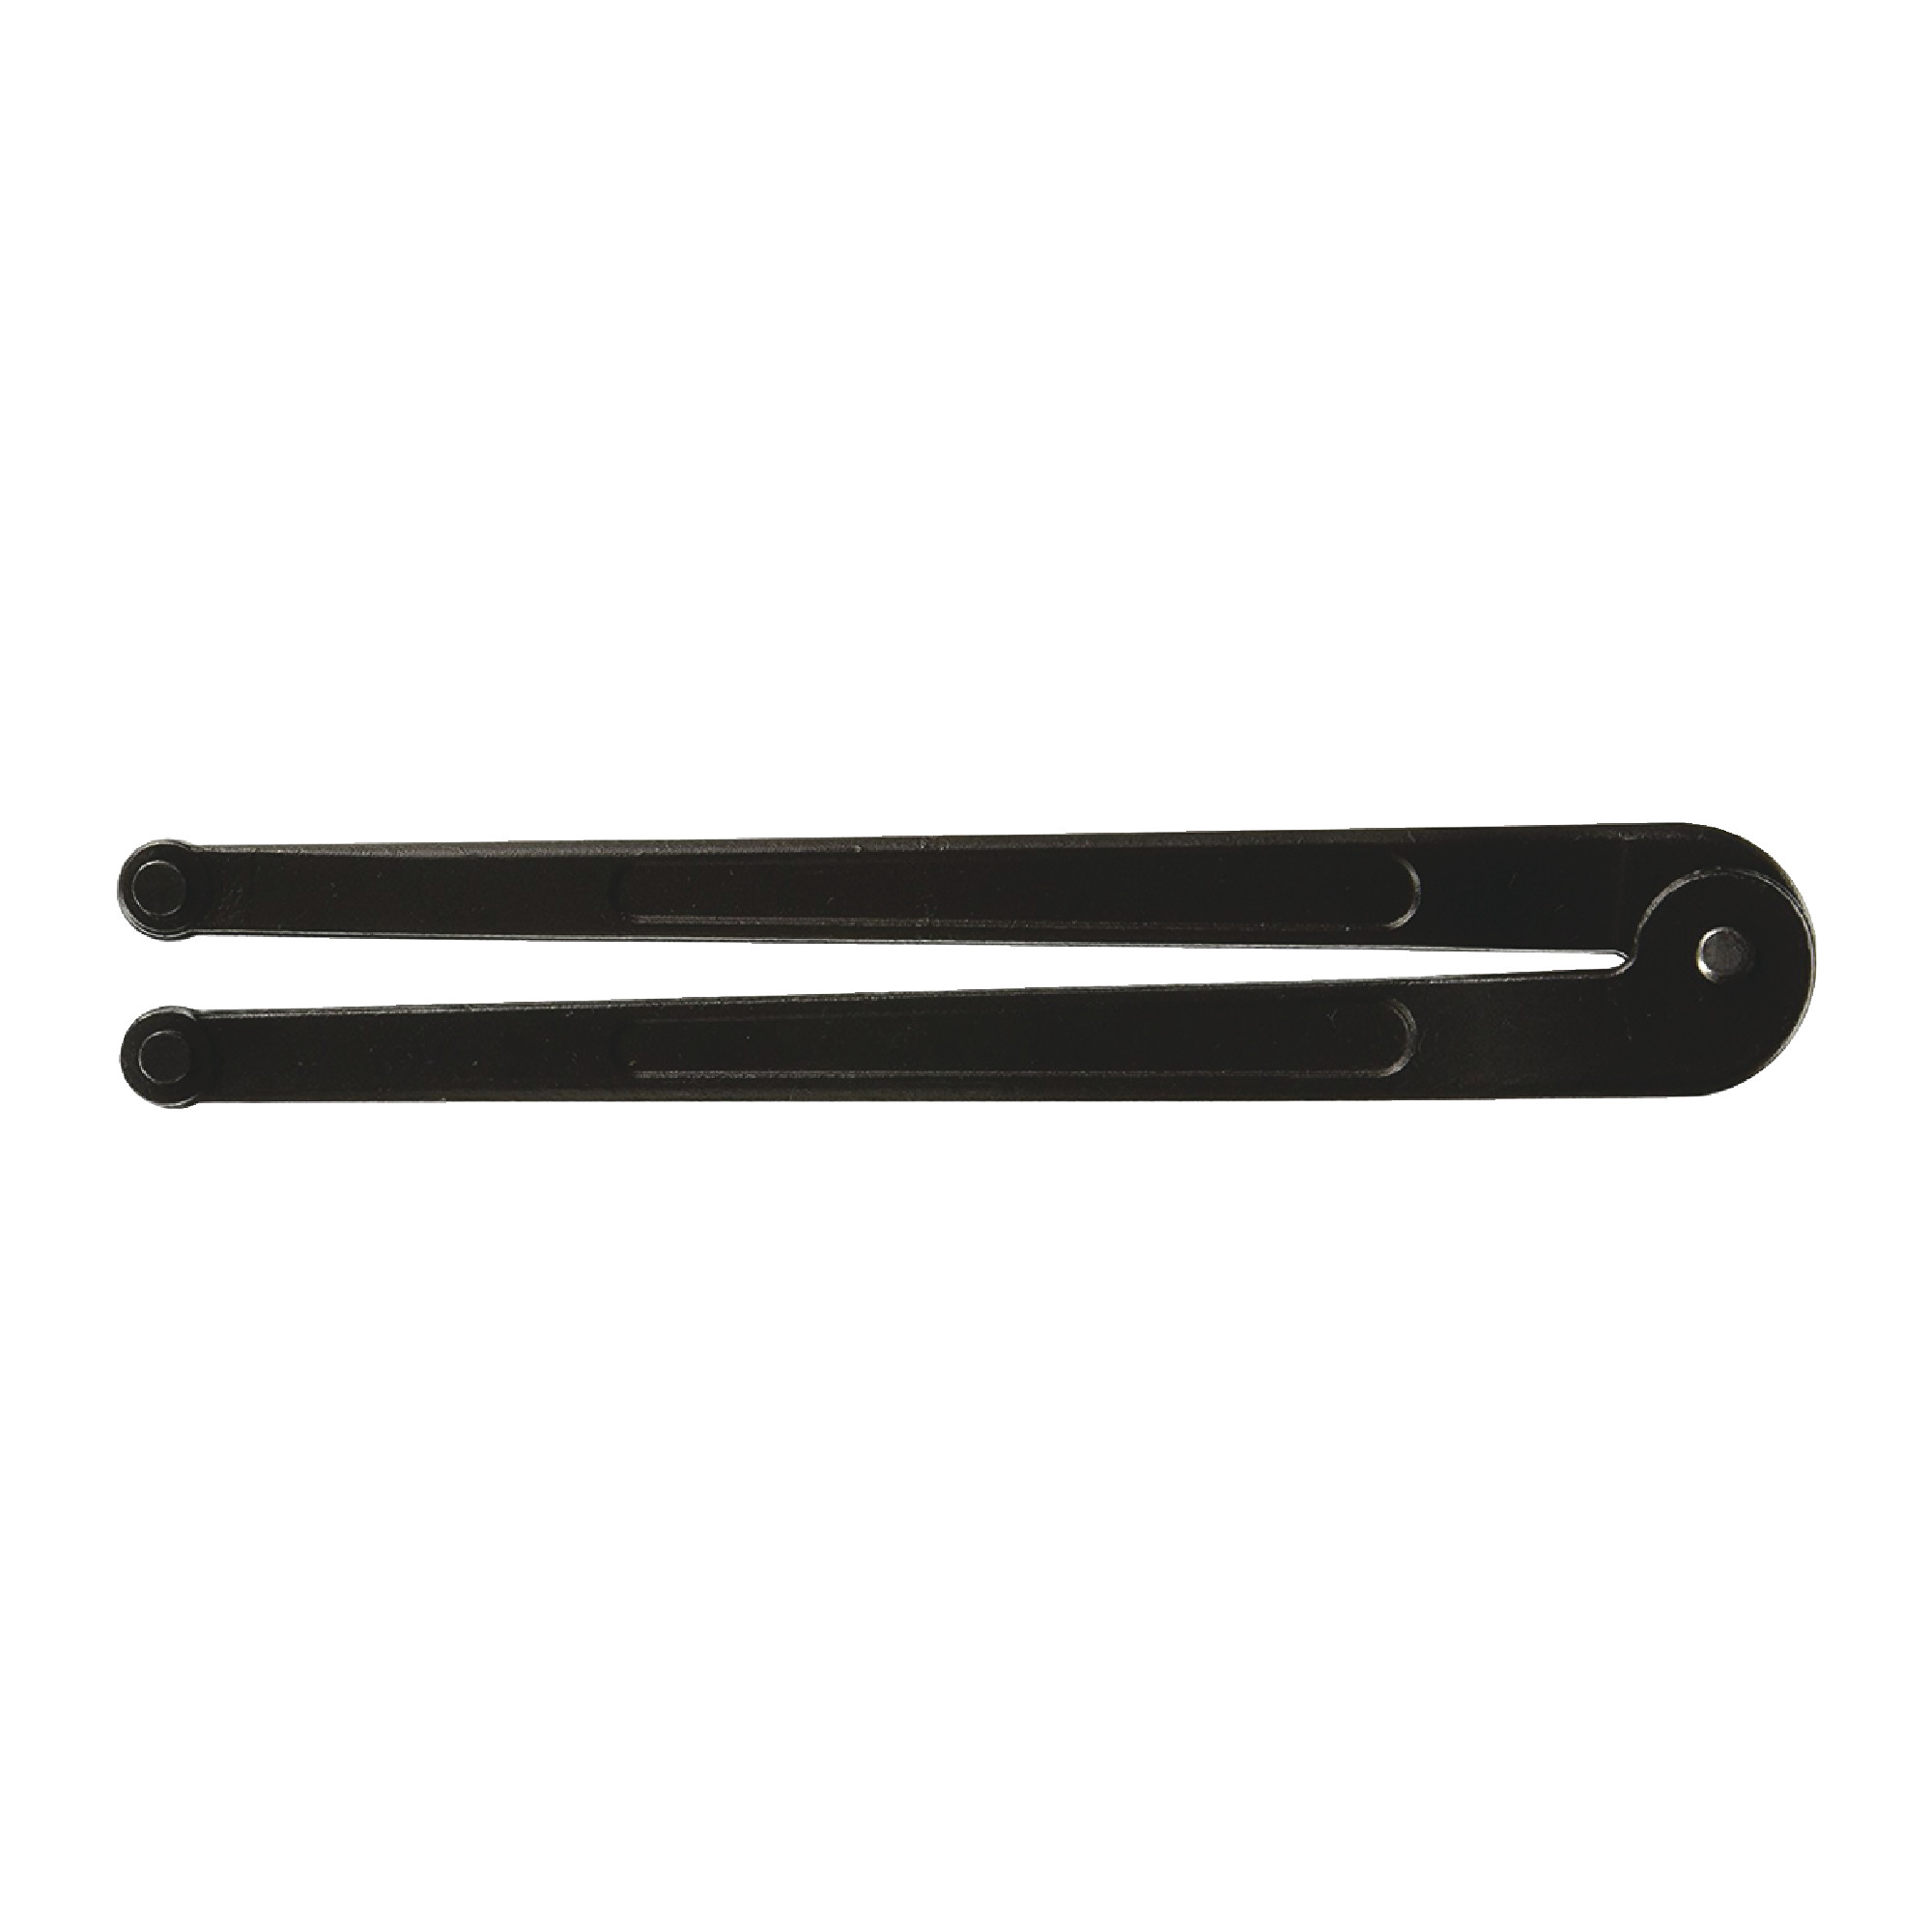 Adjustable Face Spanner Wrench - Model: 482  Diameter: 2"  Overall Length: 6-1/4"